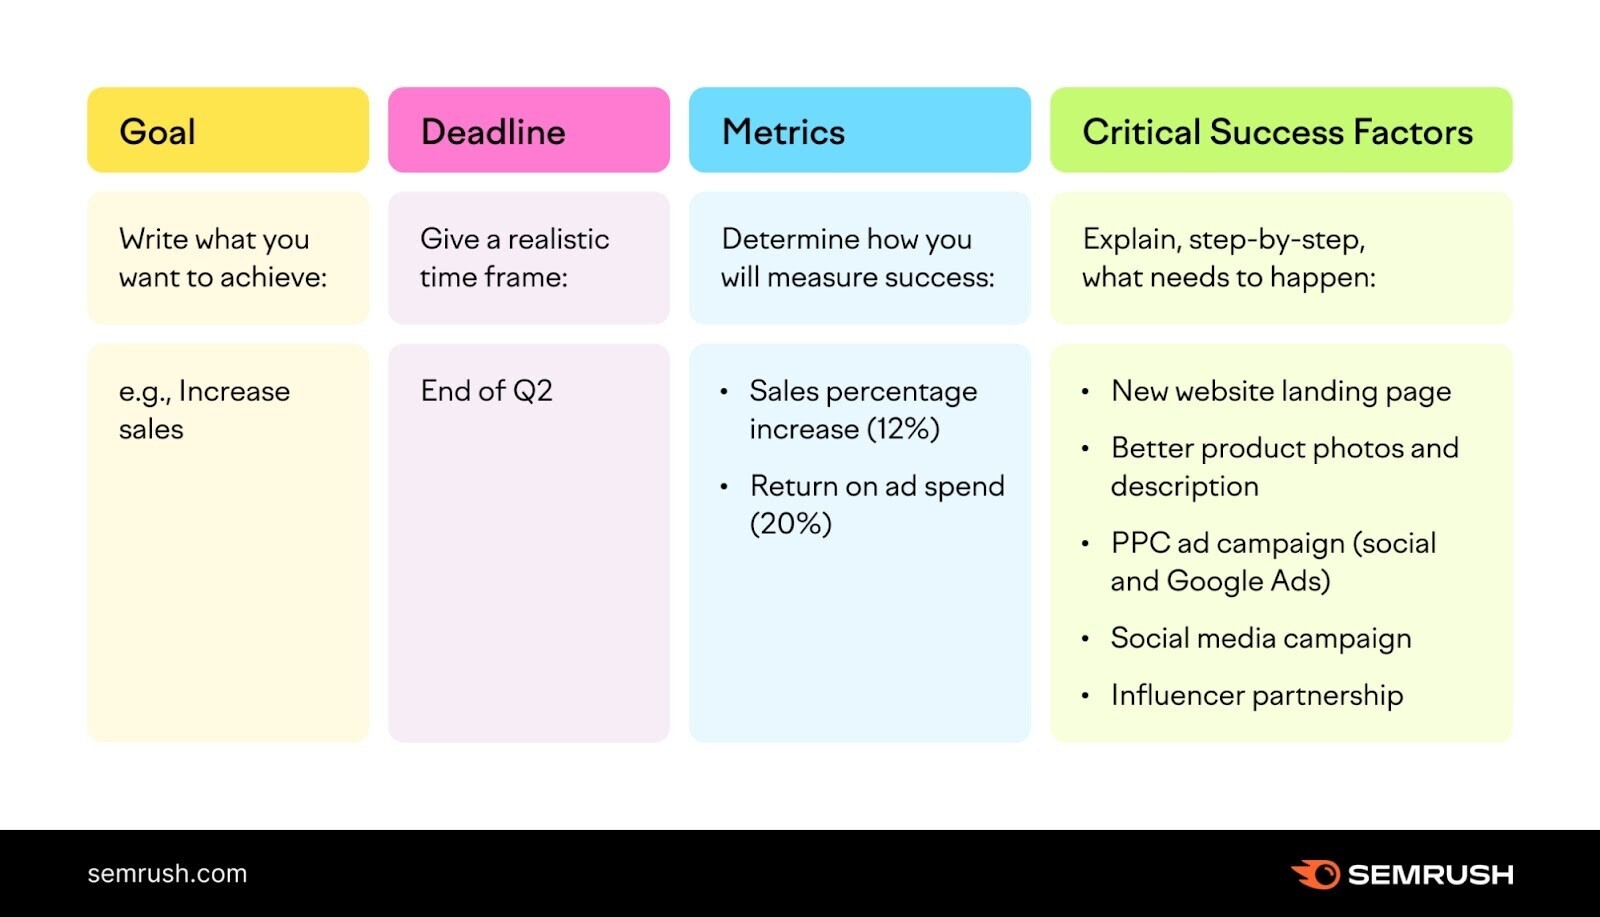 an infographic connected  "Goal, Deadline, Metrics and Critical Success Factors" columns